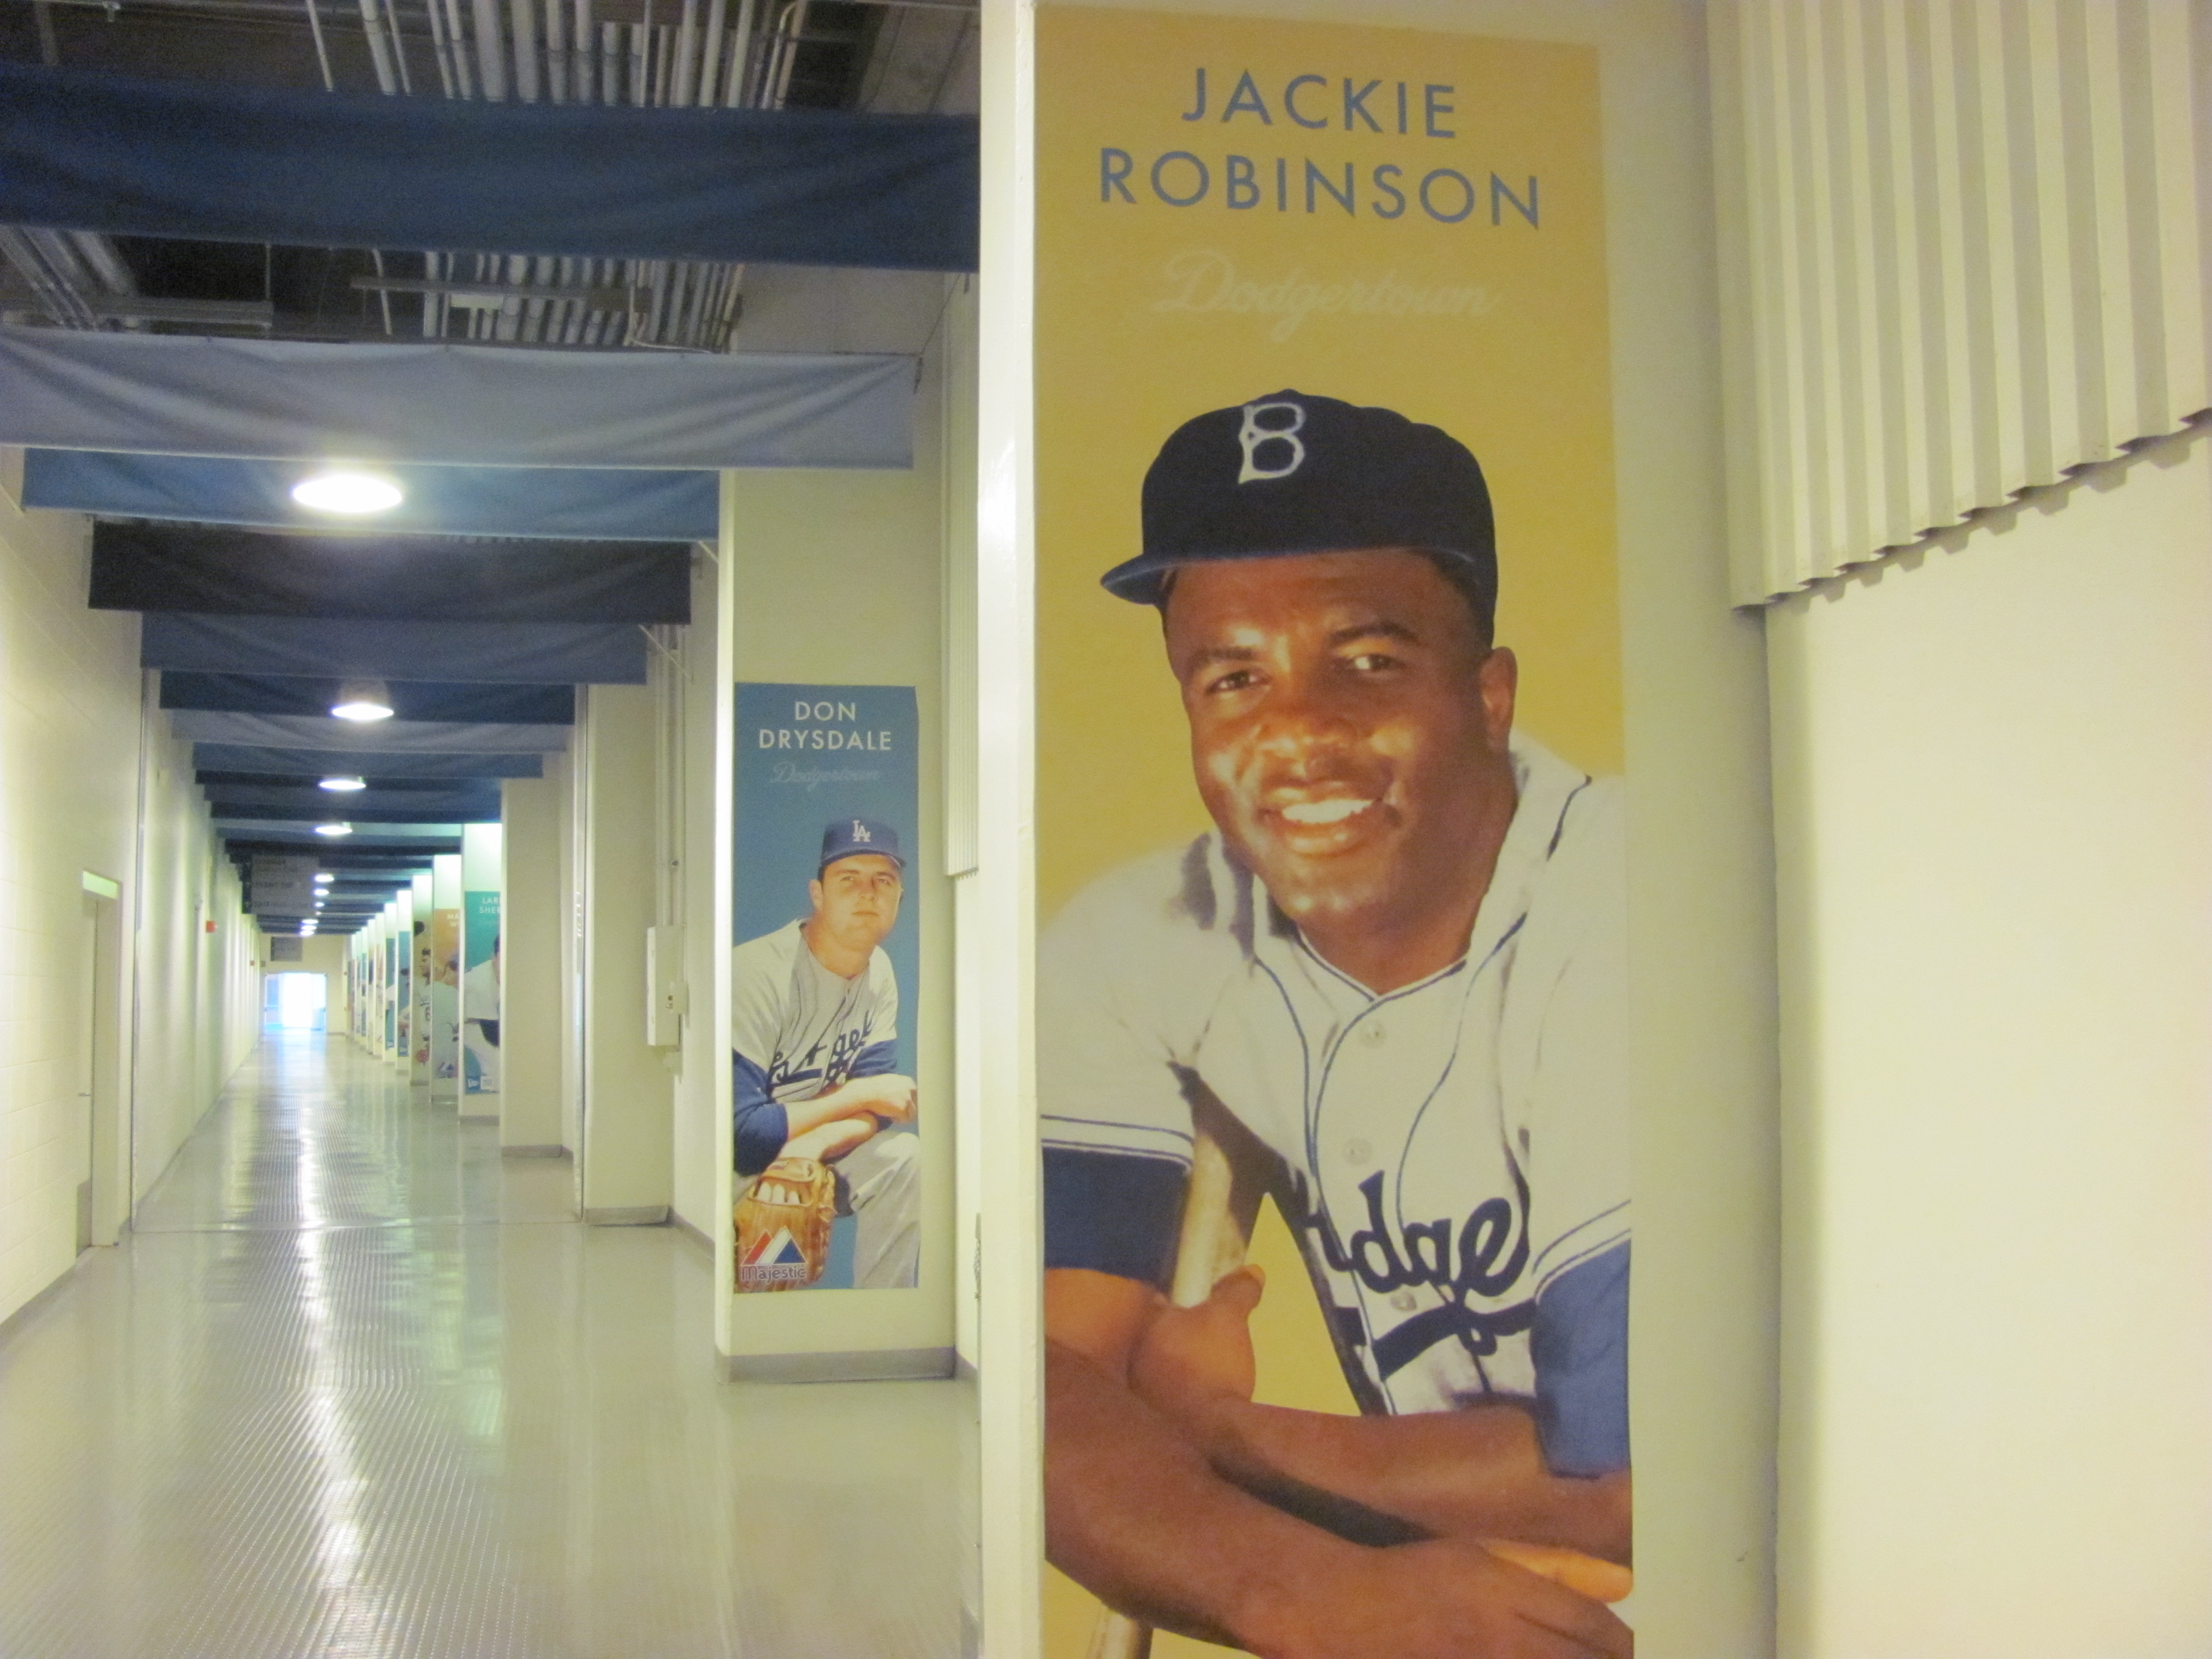 Happy Birthday Jackie Robinson